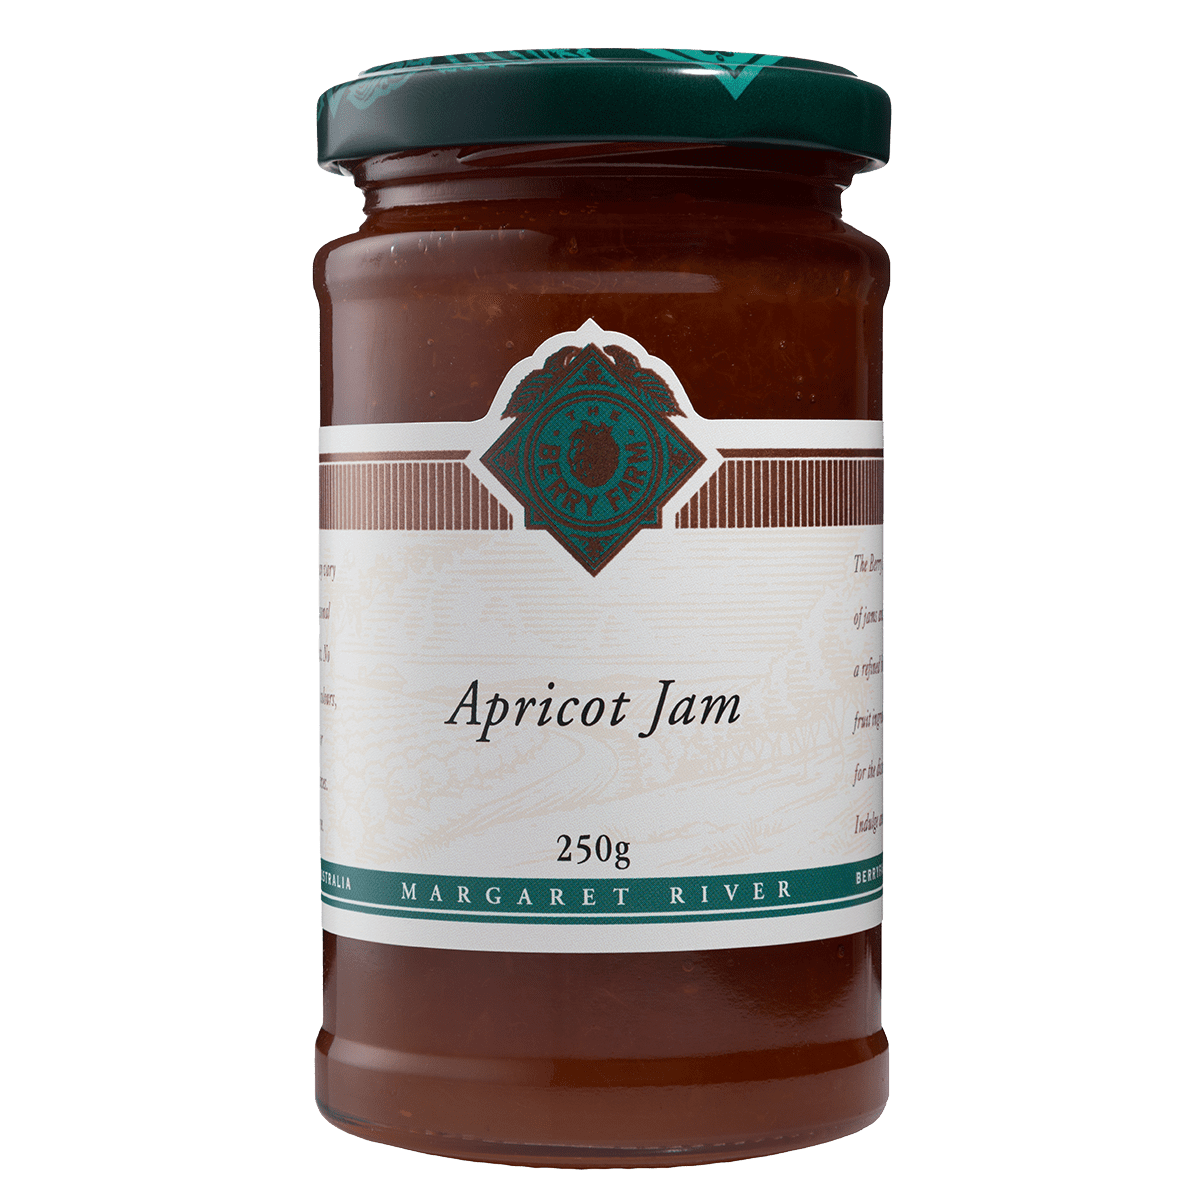 A jar of Apricot Jam